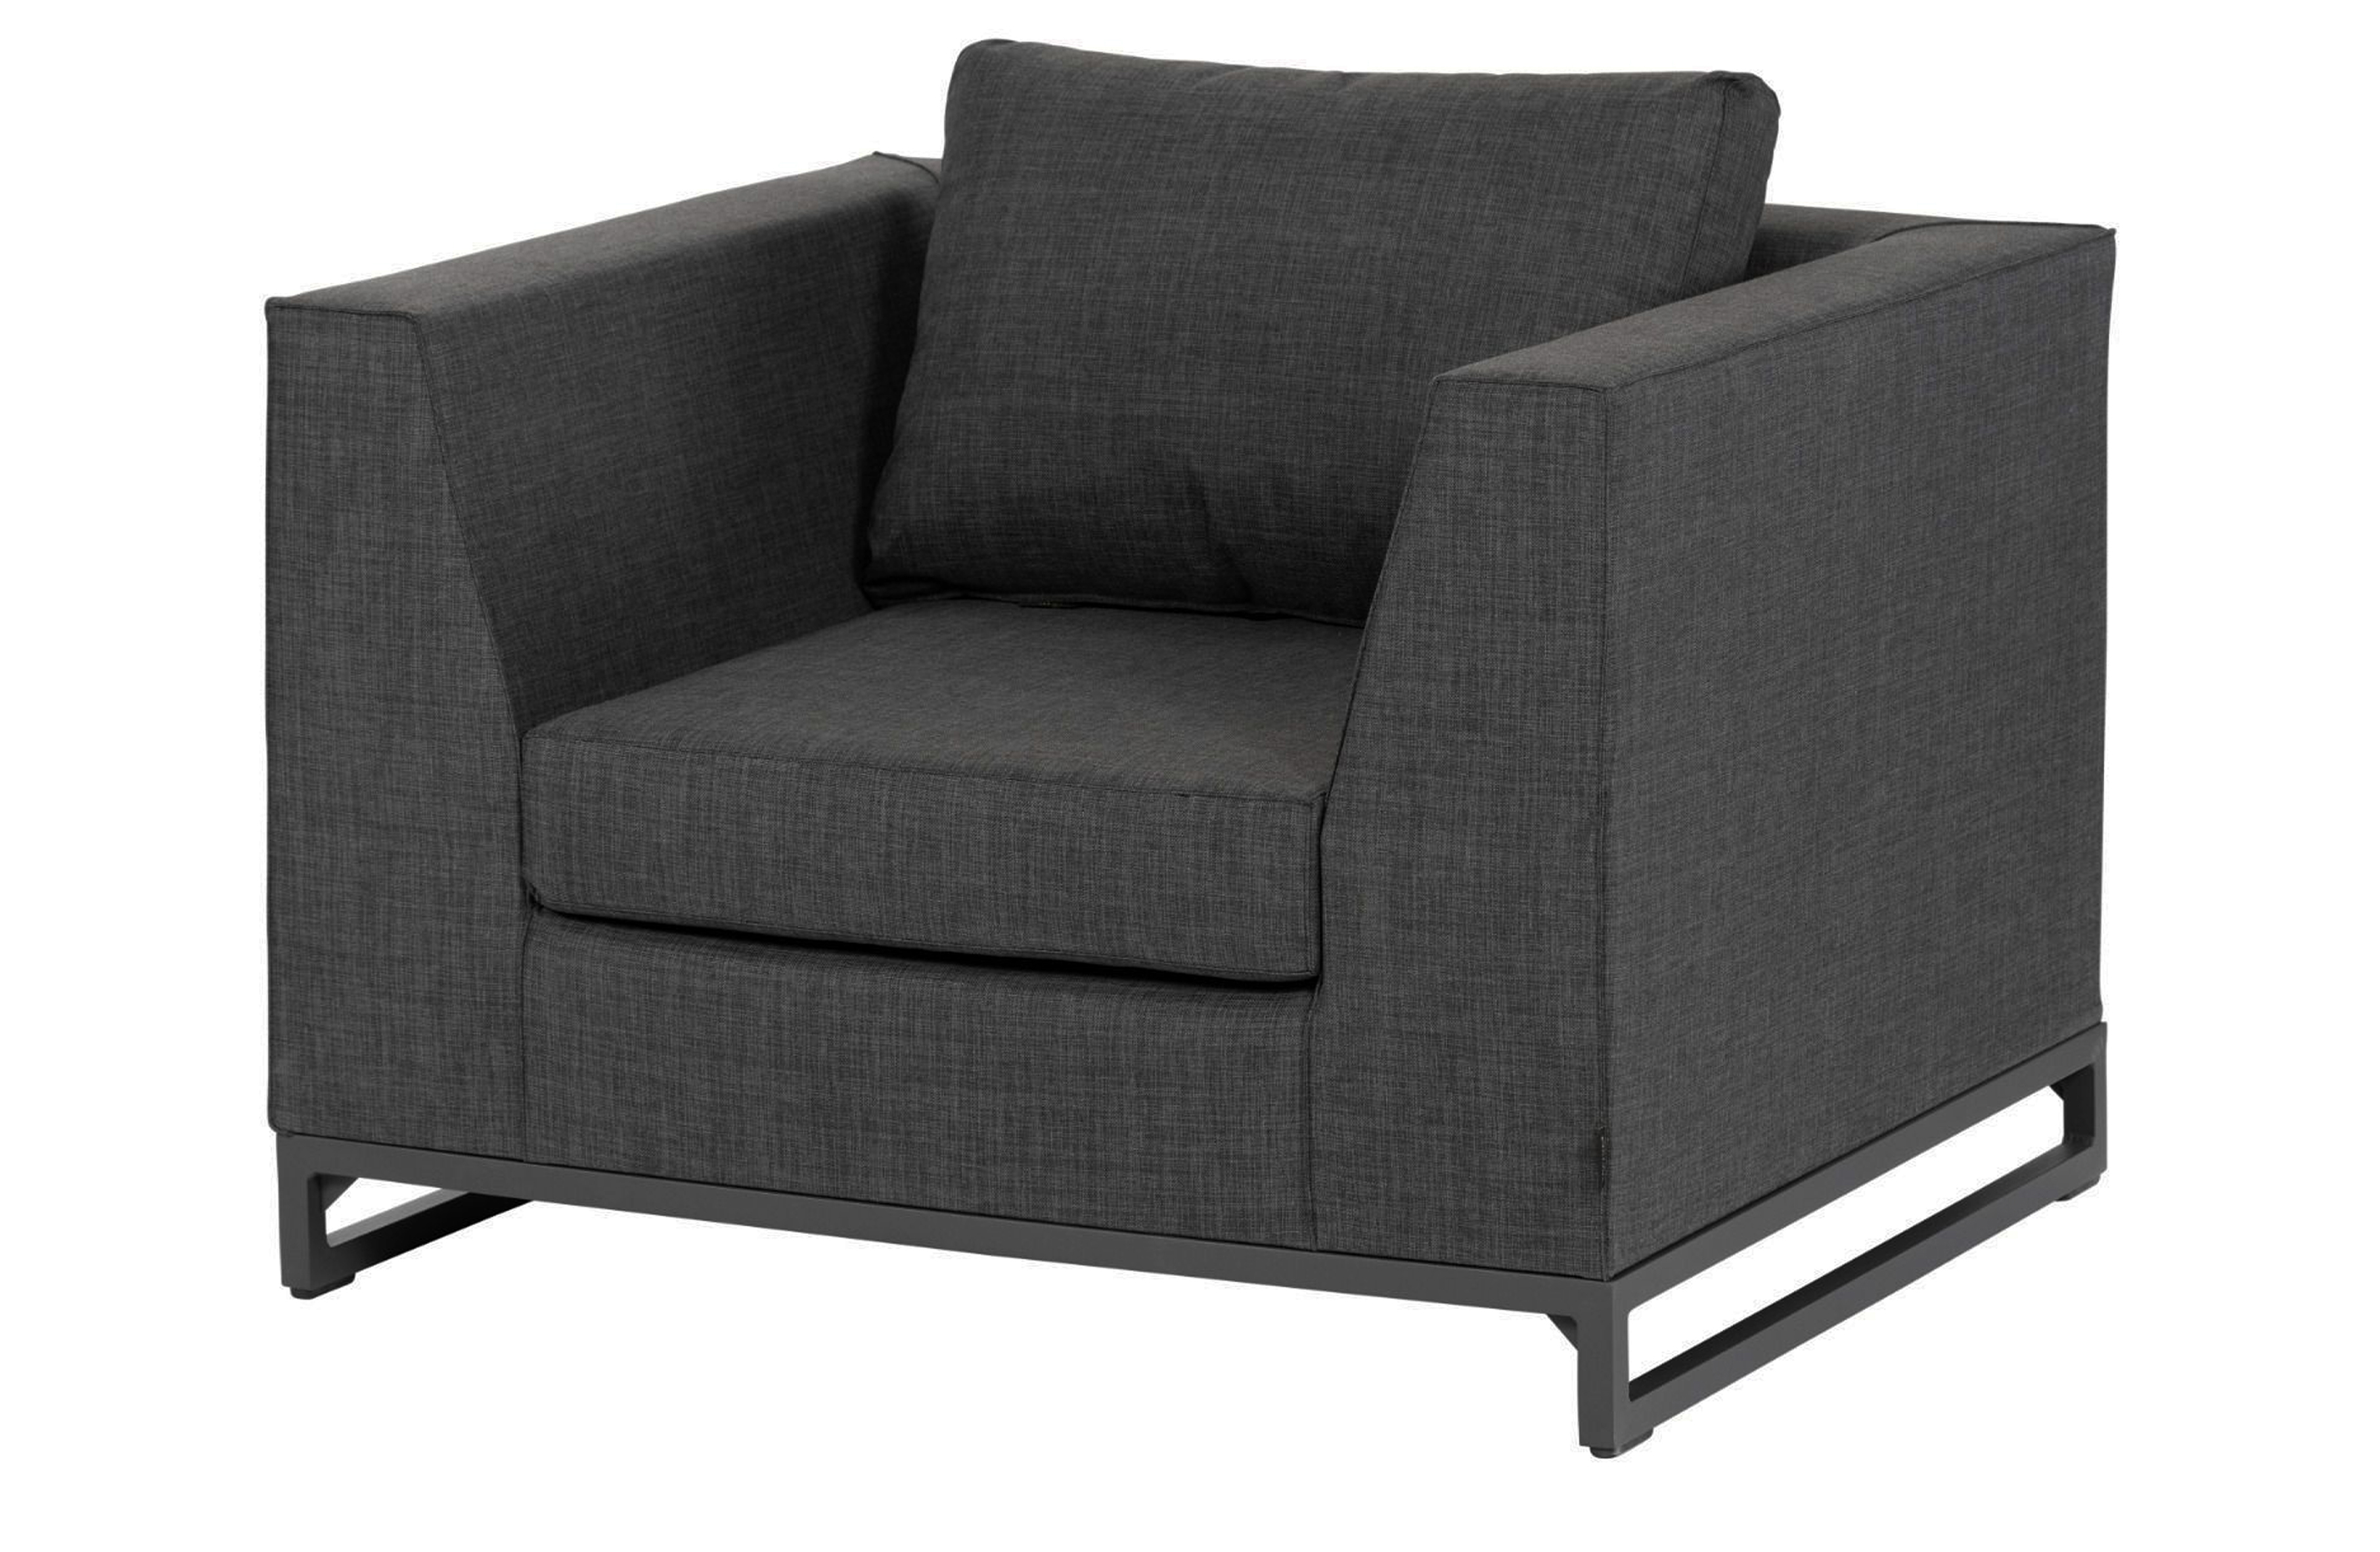 EXOTAN Rhodos loungestol til haven, m. armlæn - sort stof og aluminium